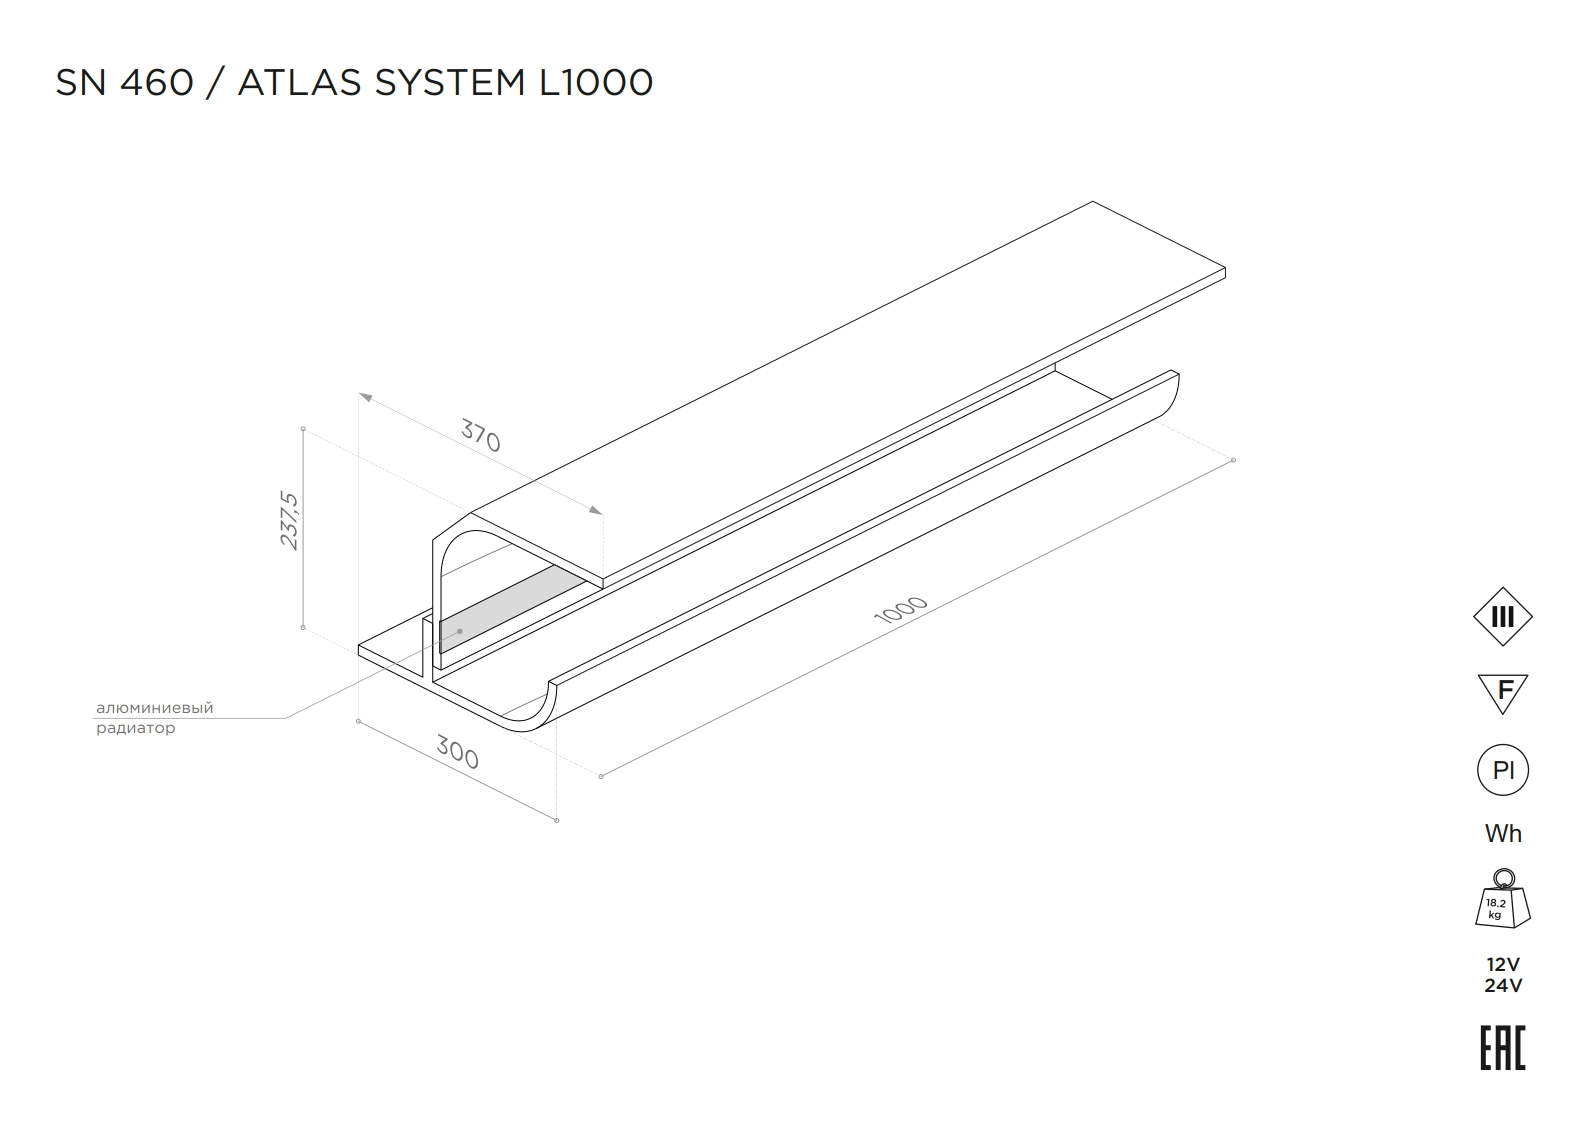 ATLAS SYSTEM L1000